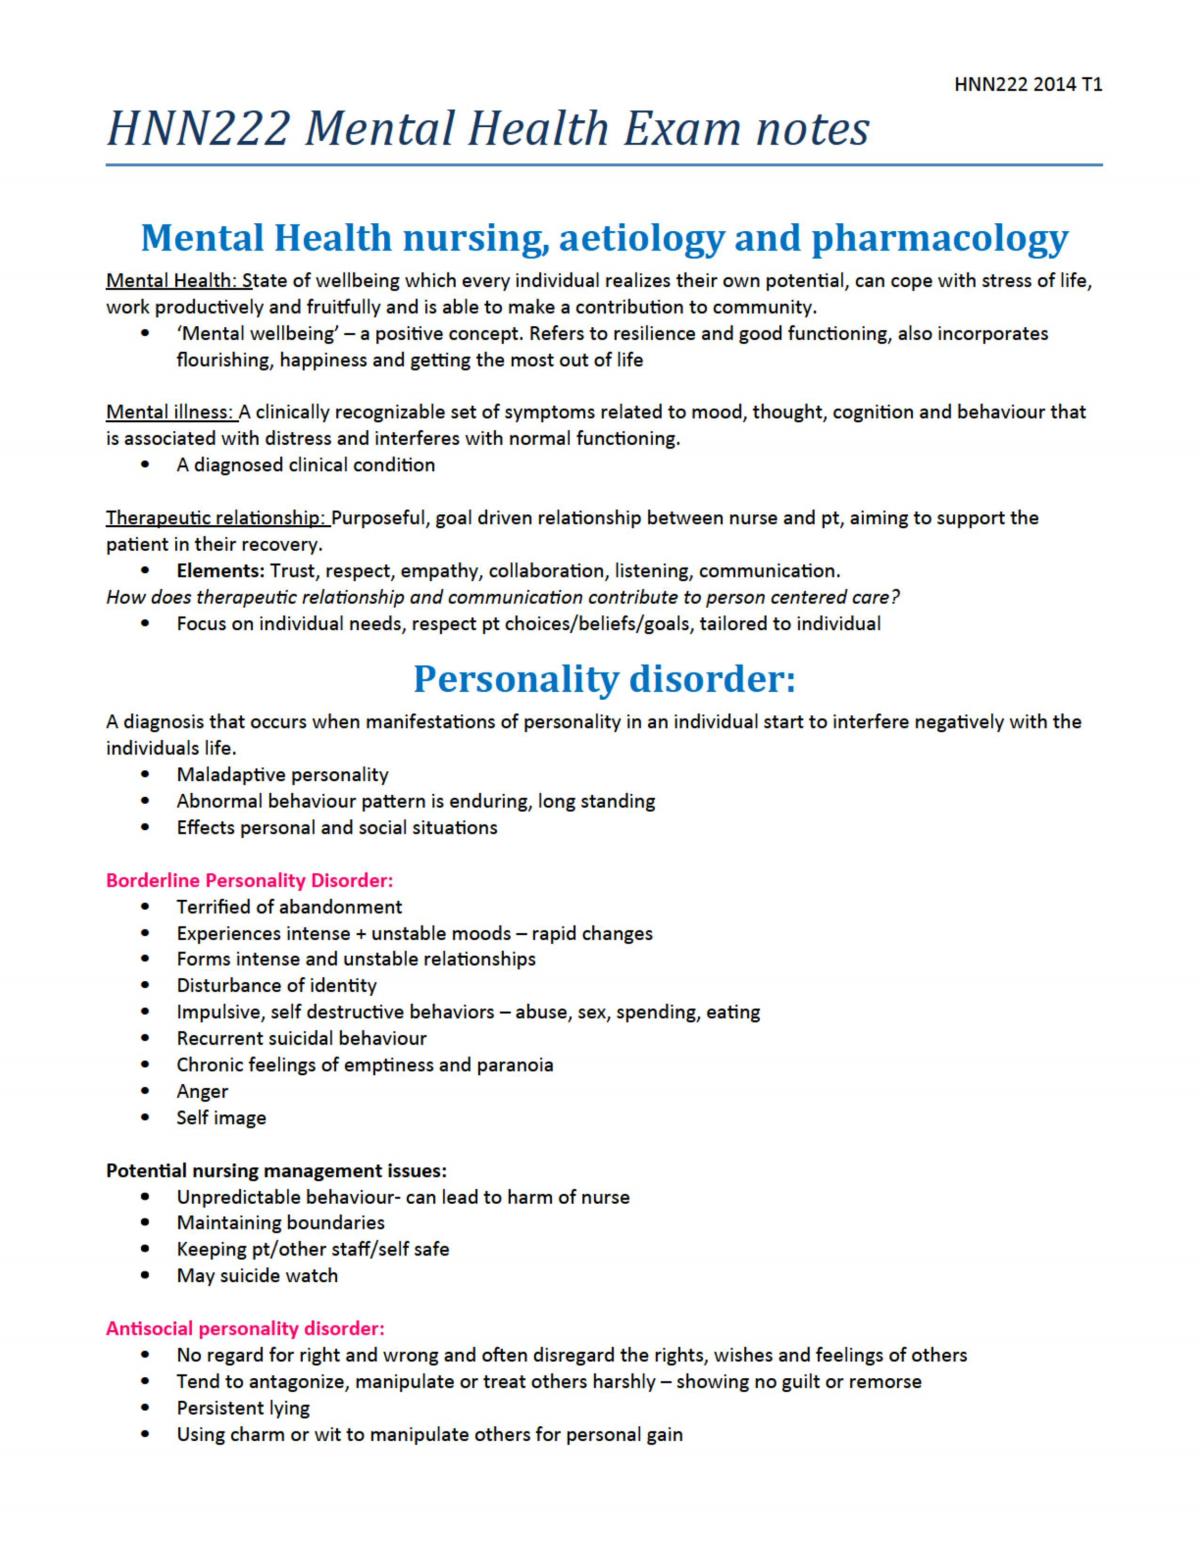 ideas for dissertation topics in mental health nursing